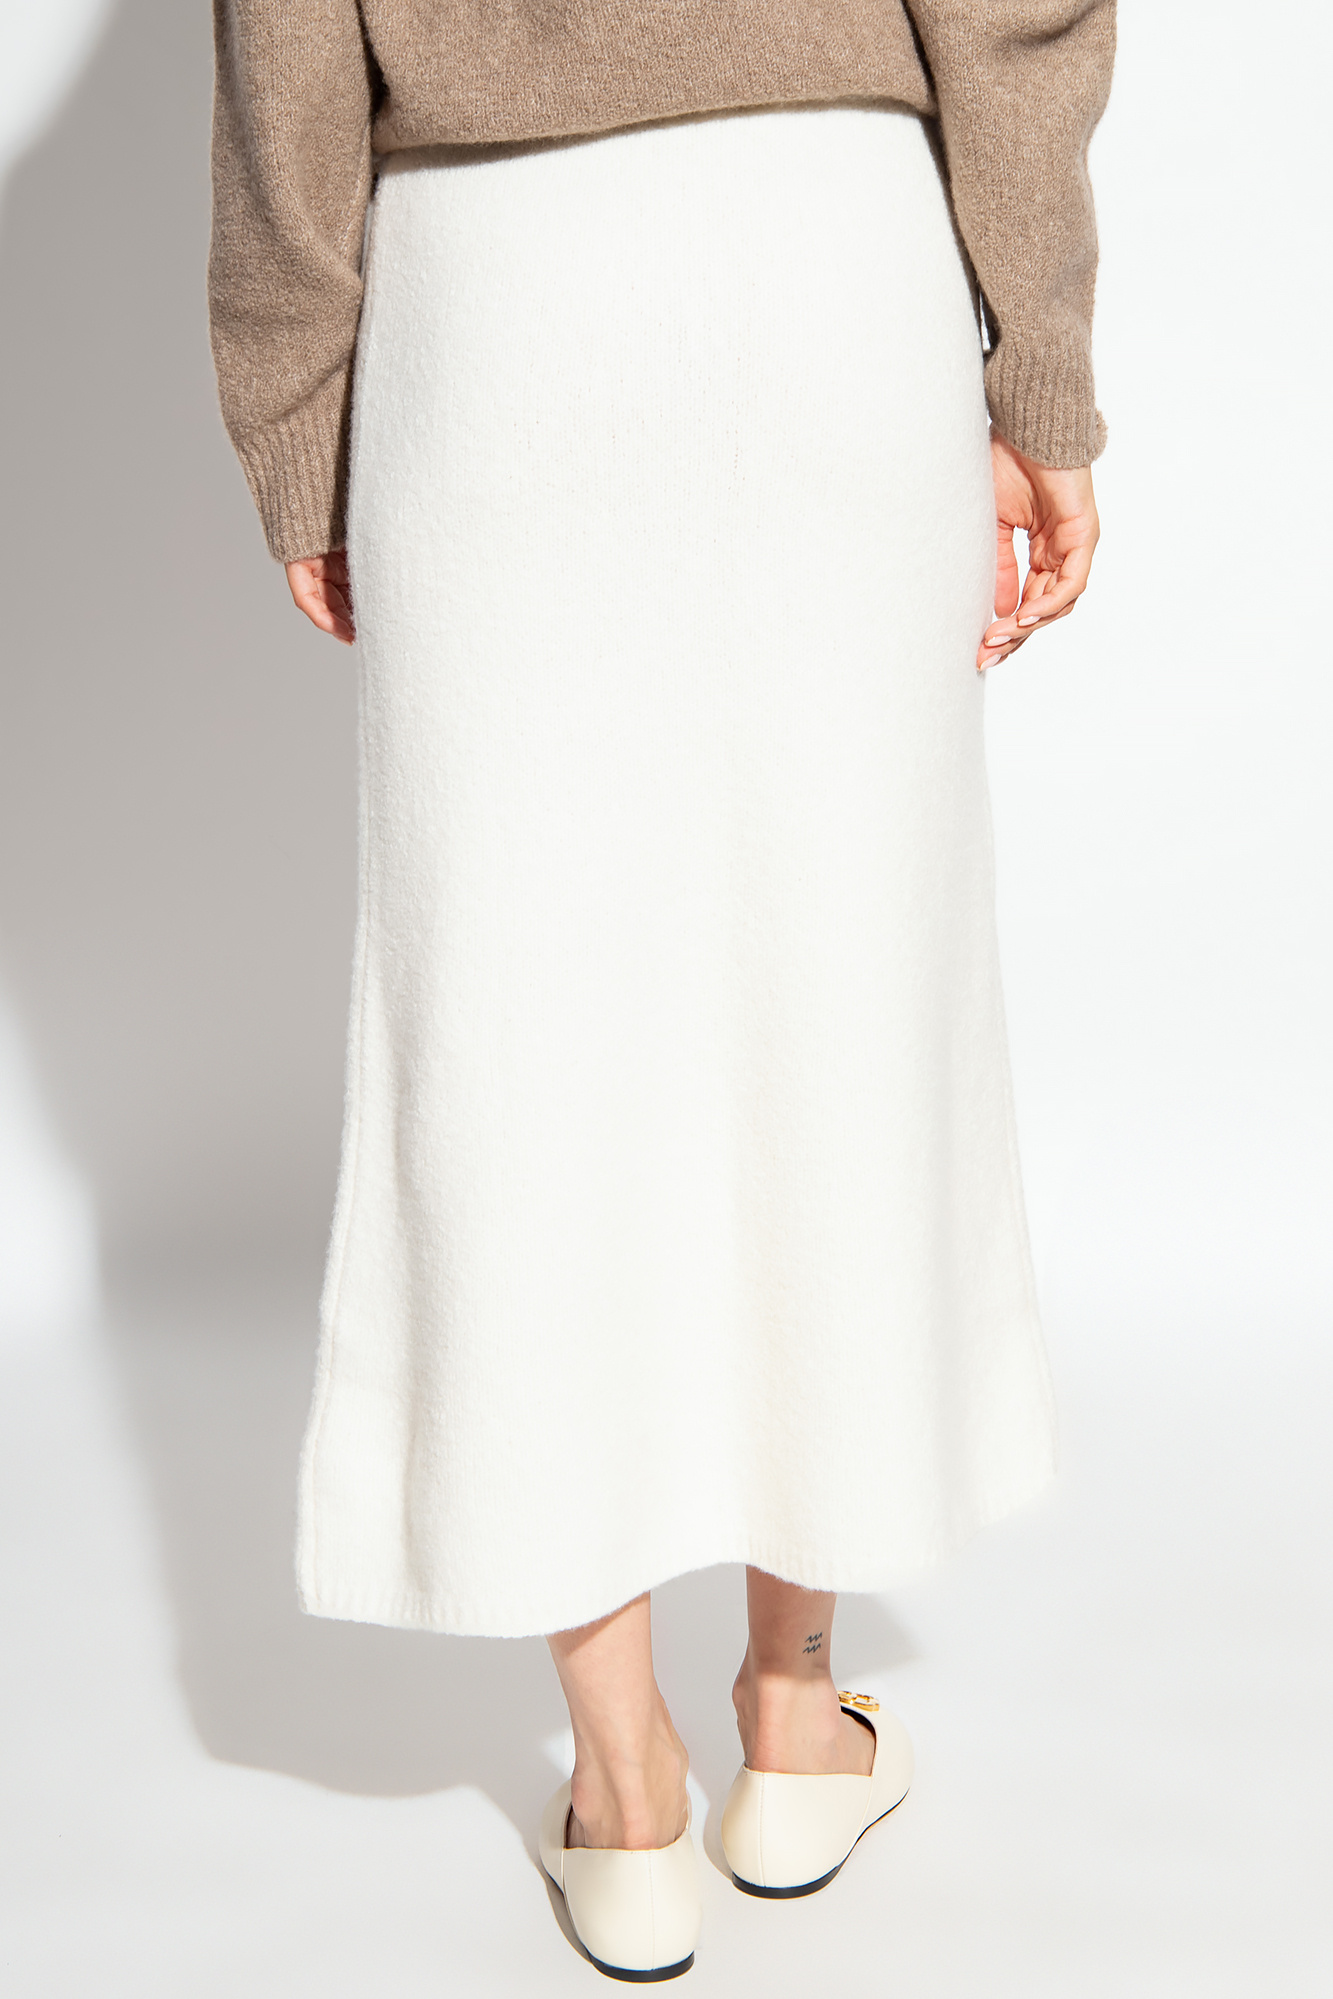 Lisa Yang ‘Kael’ skirt